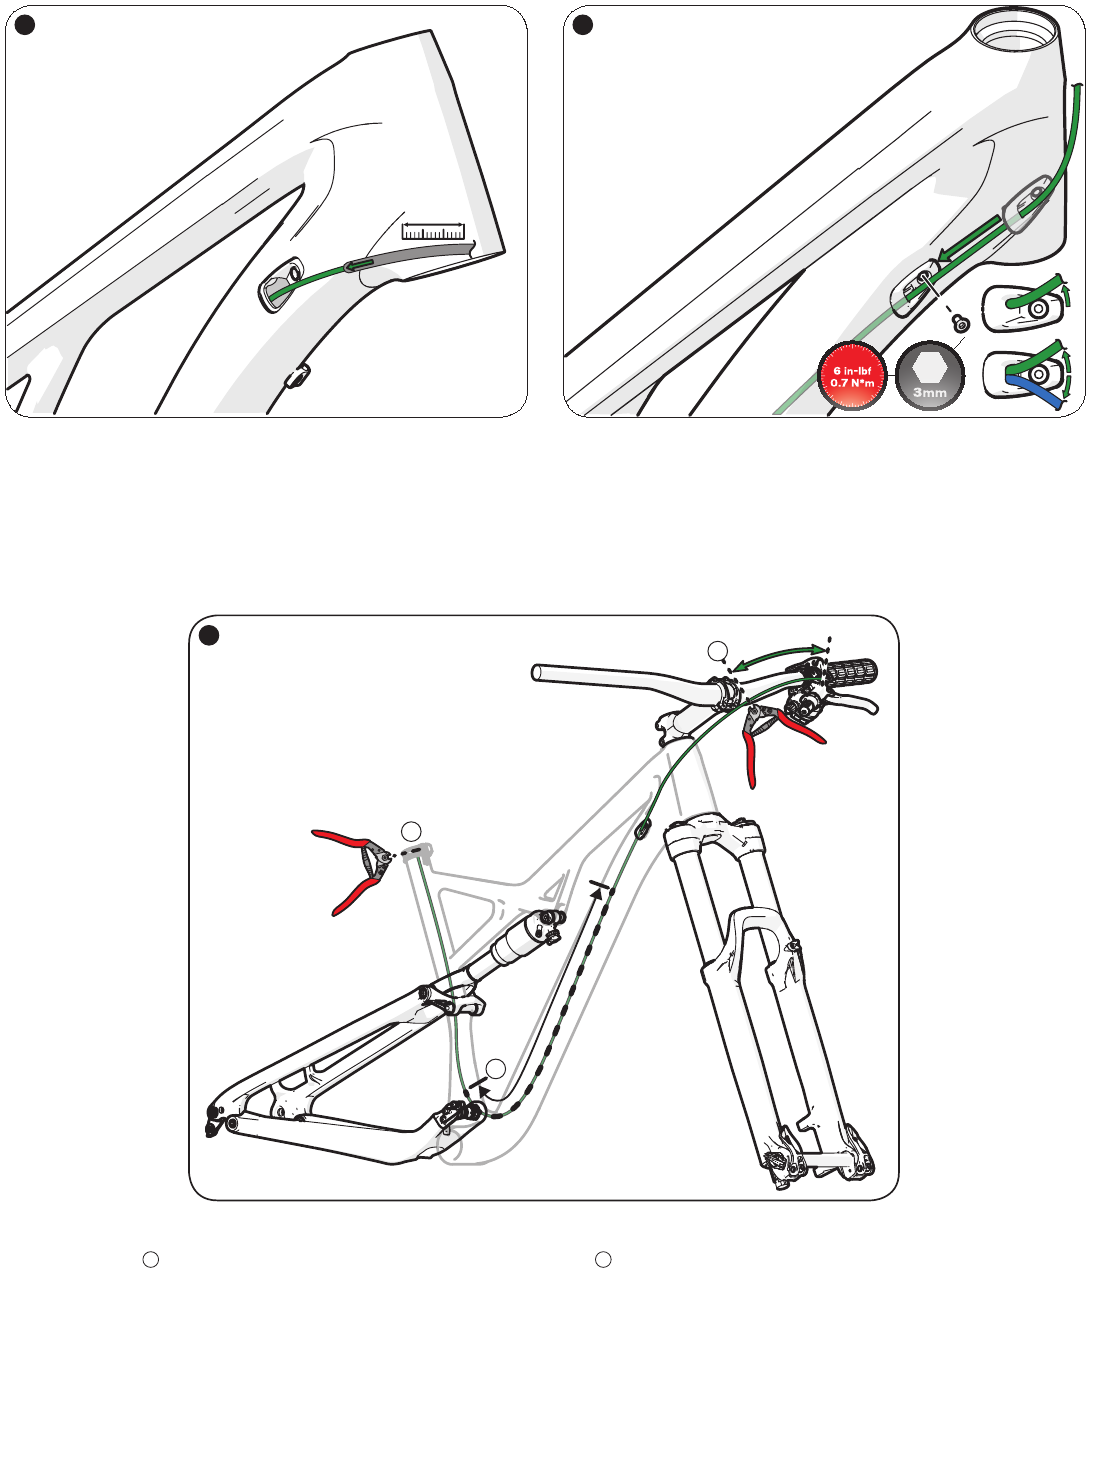 specialized stumpjumper parts diagram